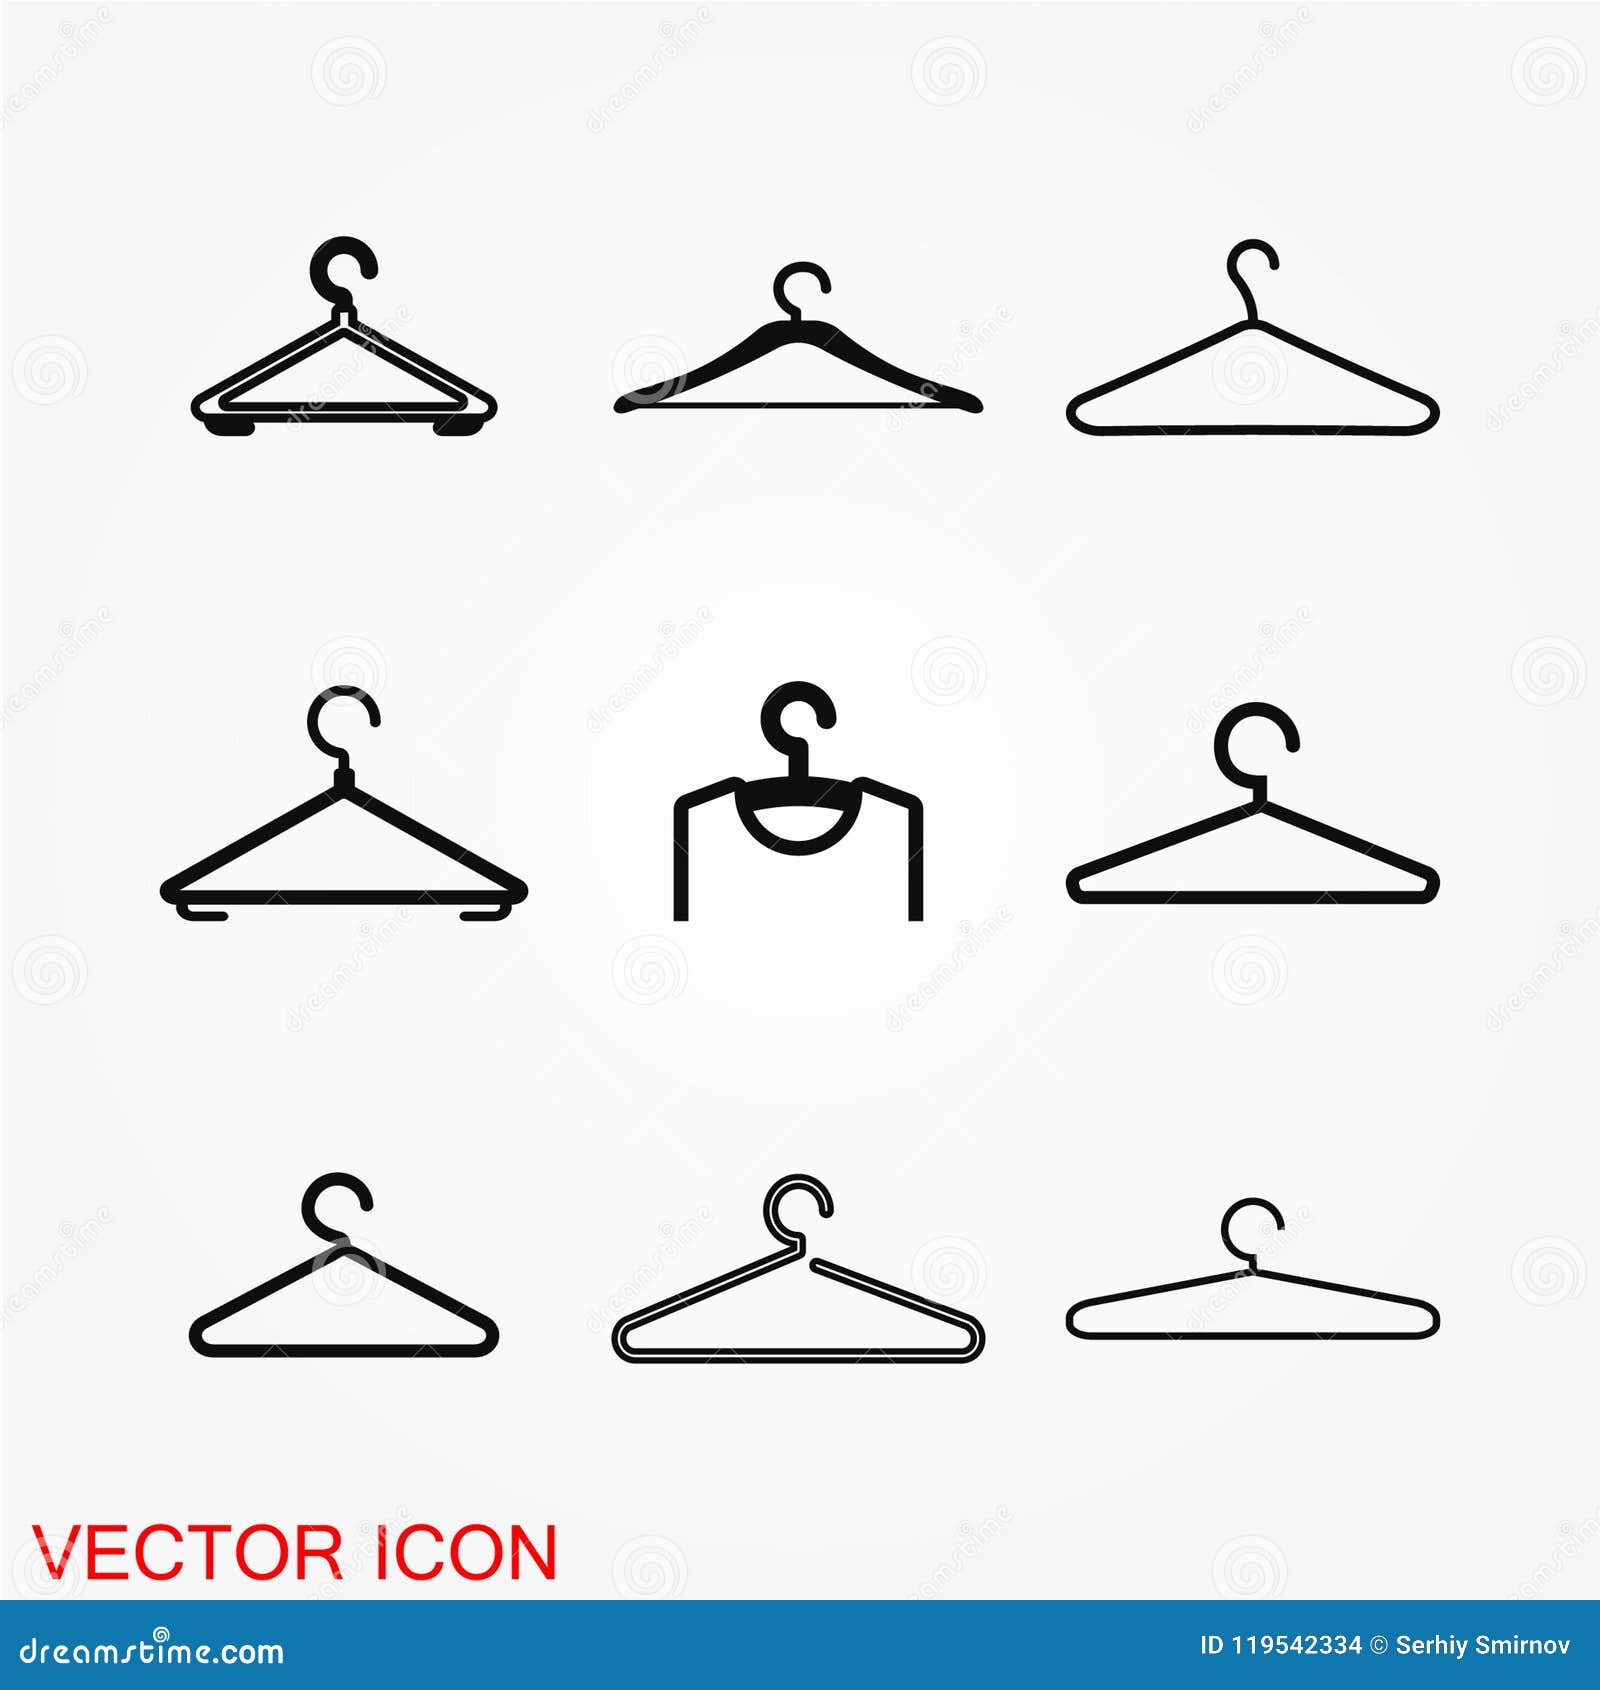 Hanger icon vector stock vector. Illustration of black - 119542334